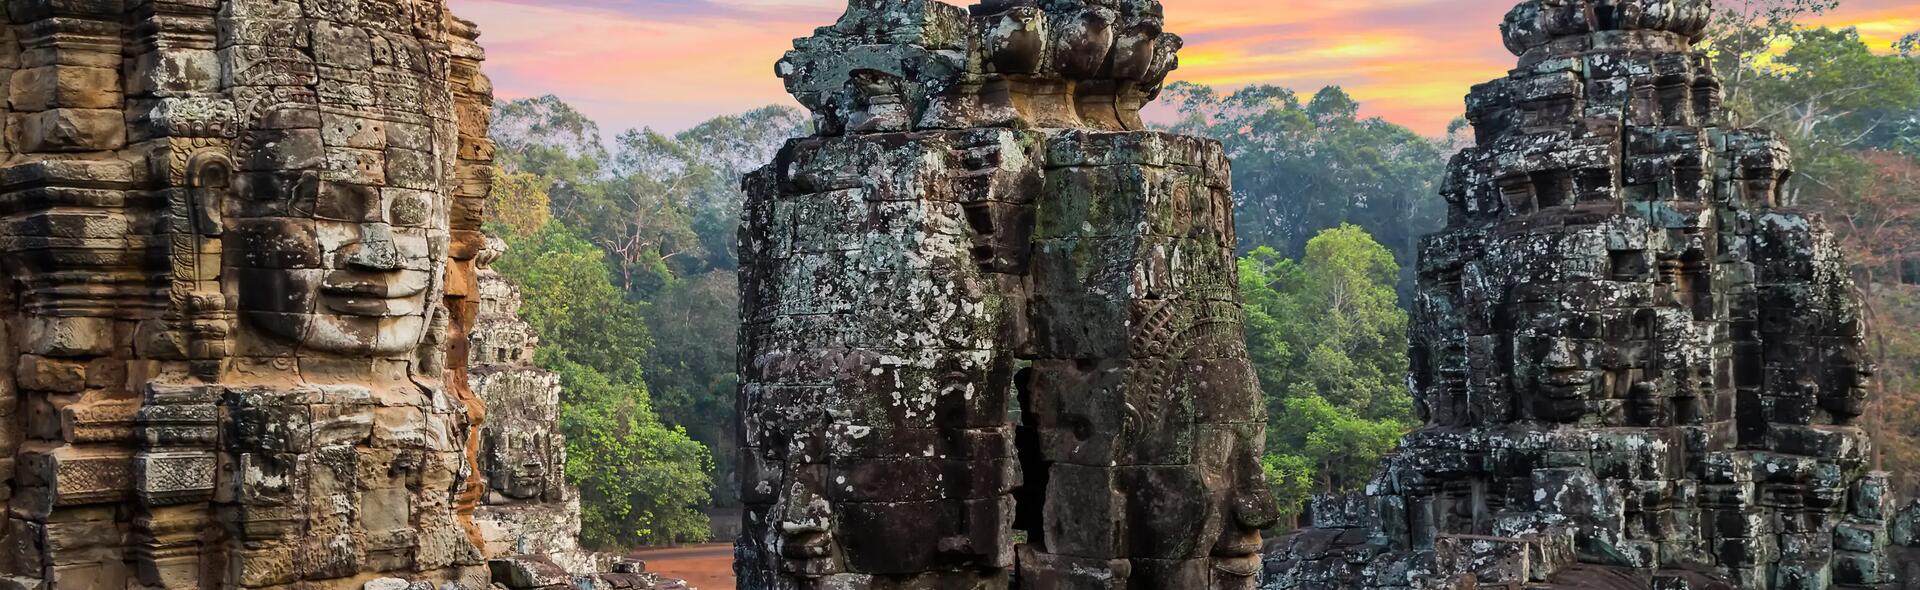 voyage cambodge temples d'angkor